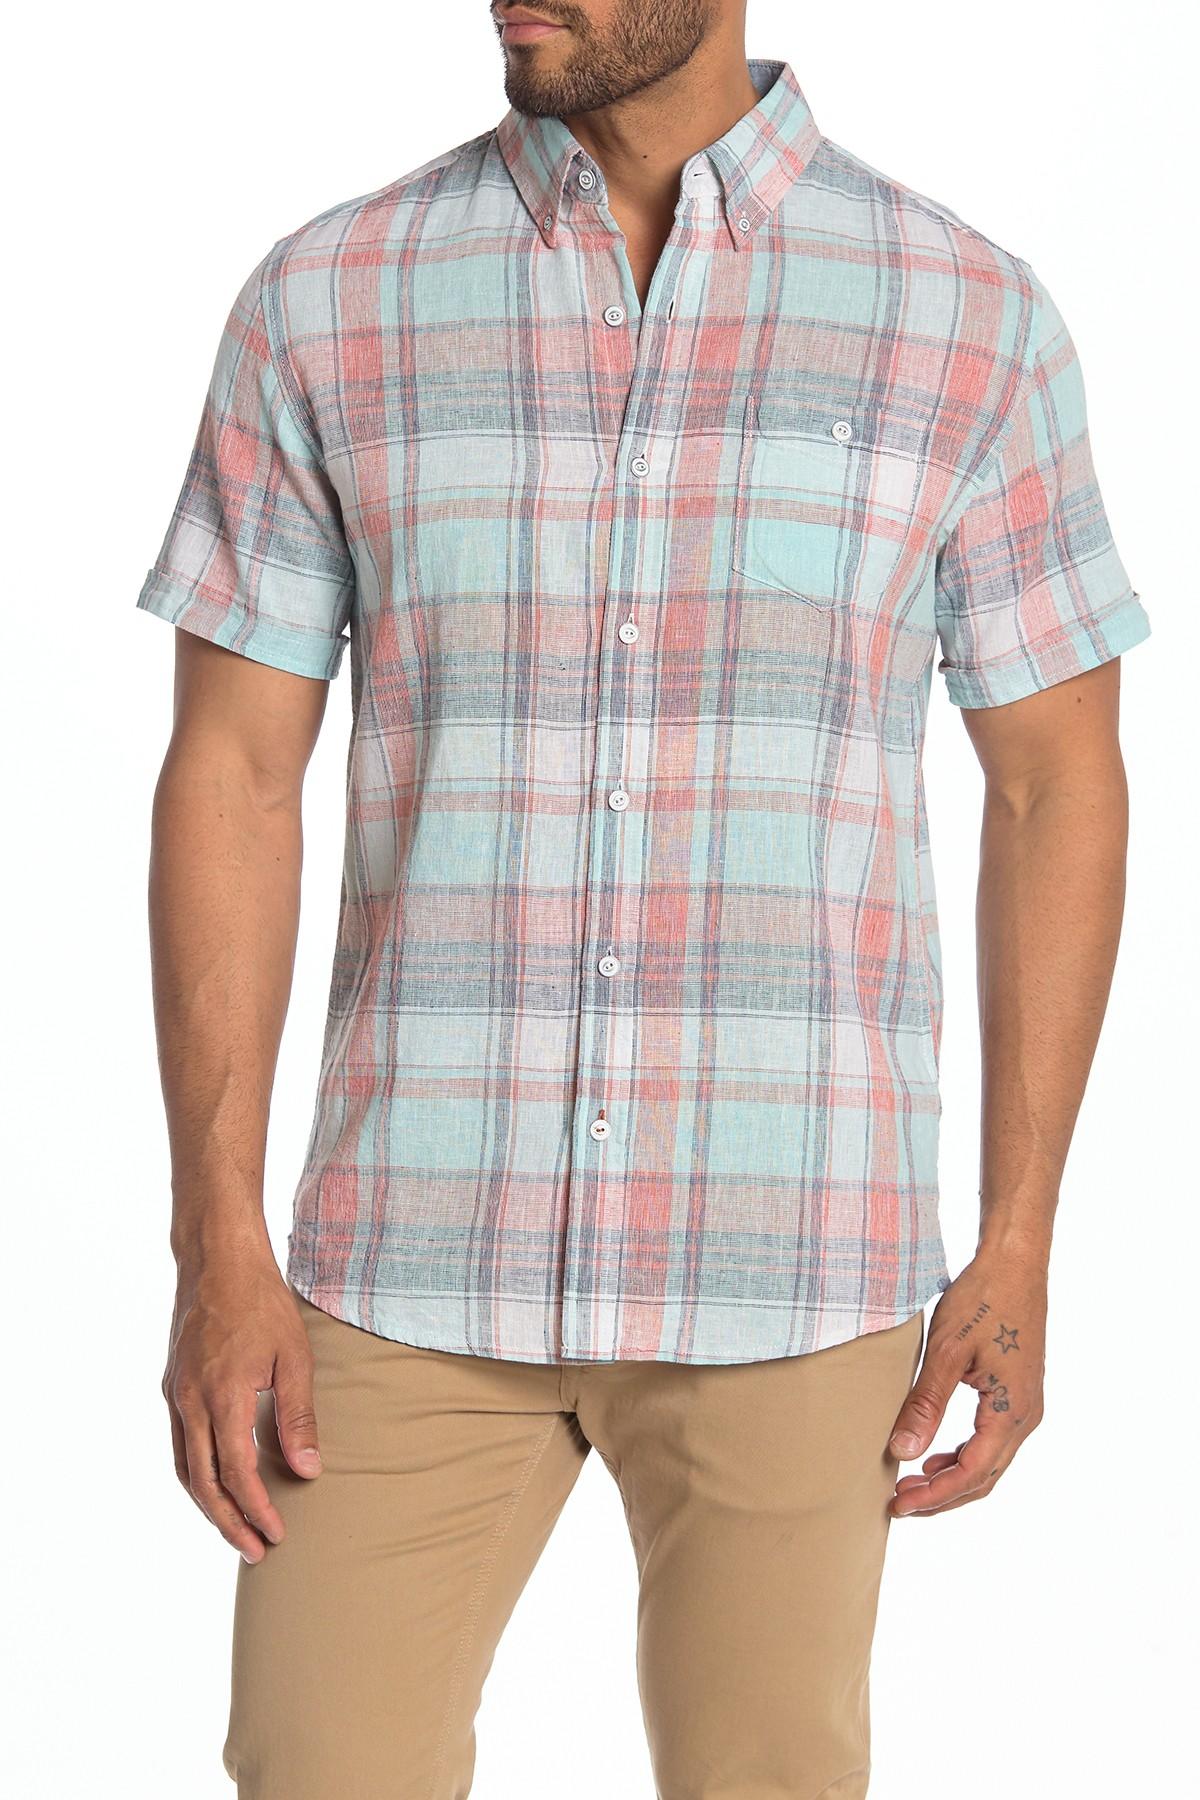 Lyst - Weatherproof Linen Blend Plaid Regular Fit Shirt in Blue for Men